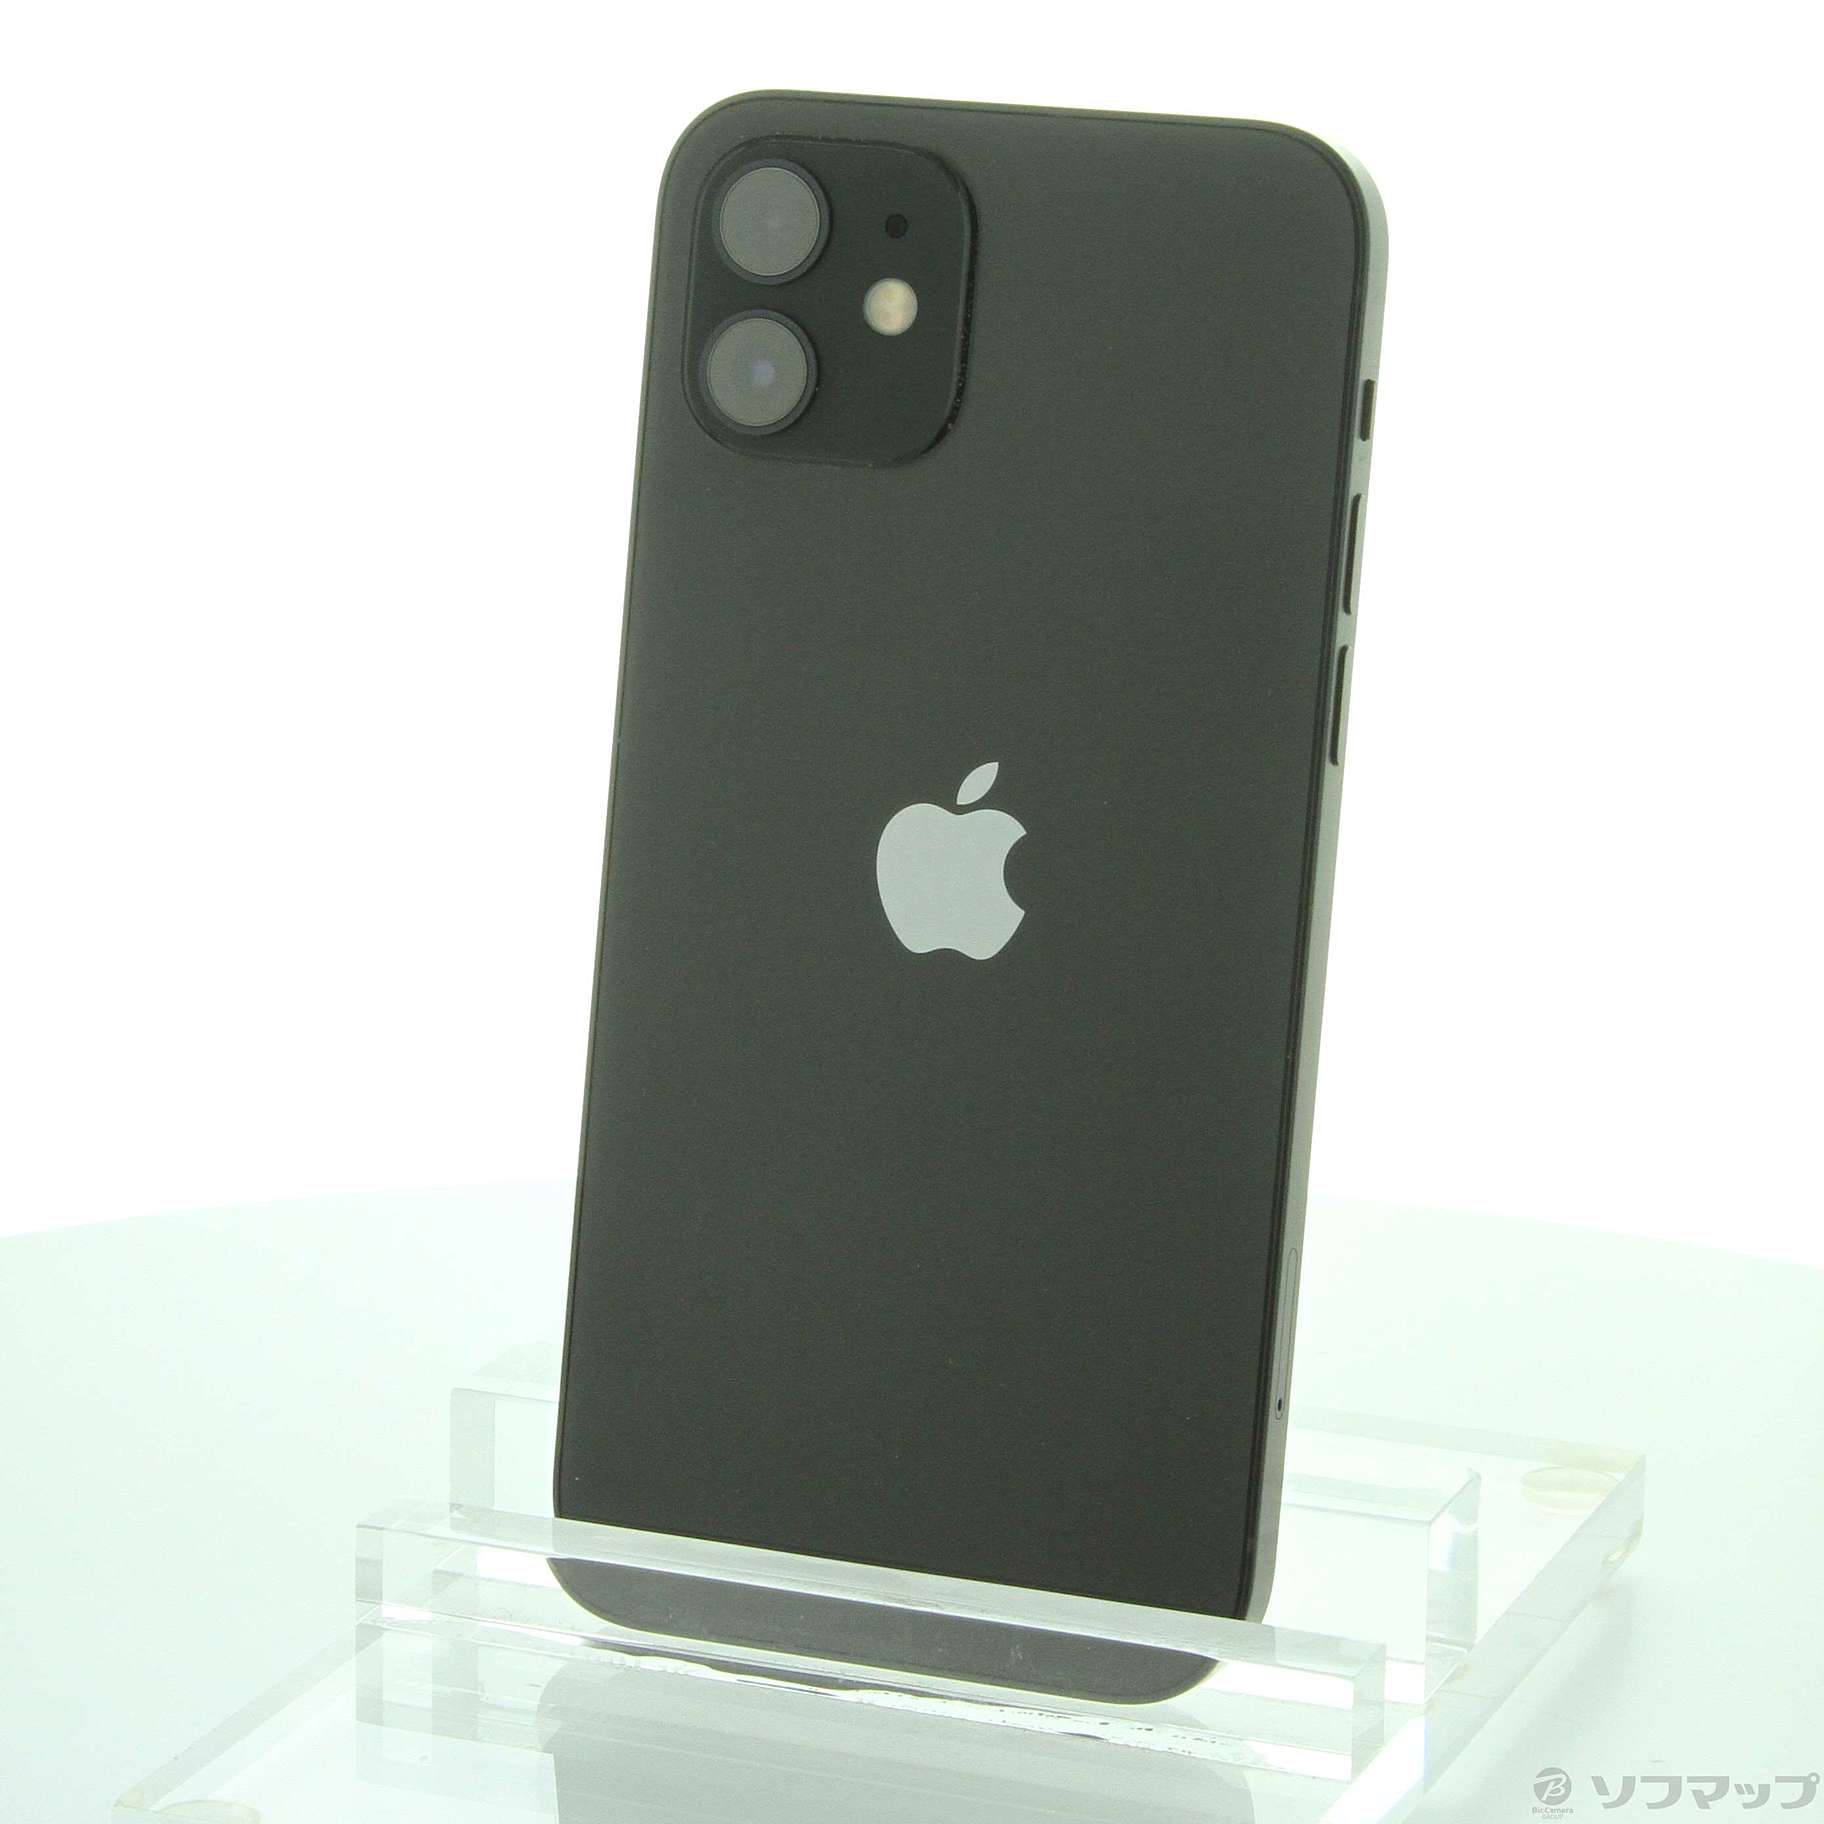 iPhone 12 ブラック 256 GB SIMフリー機種名iPhone12